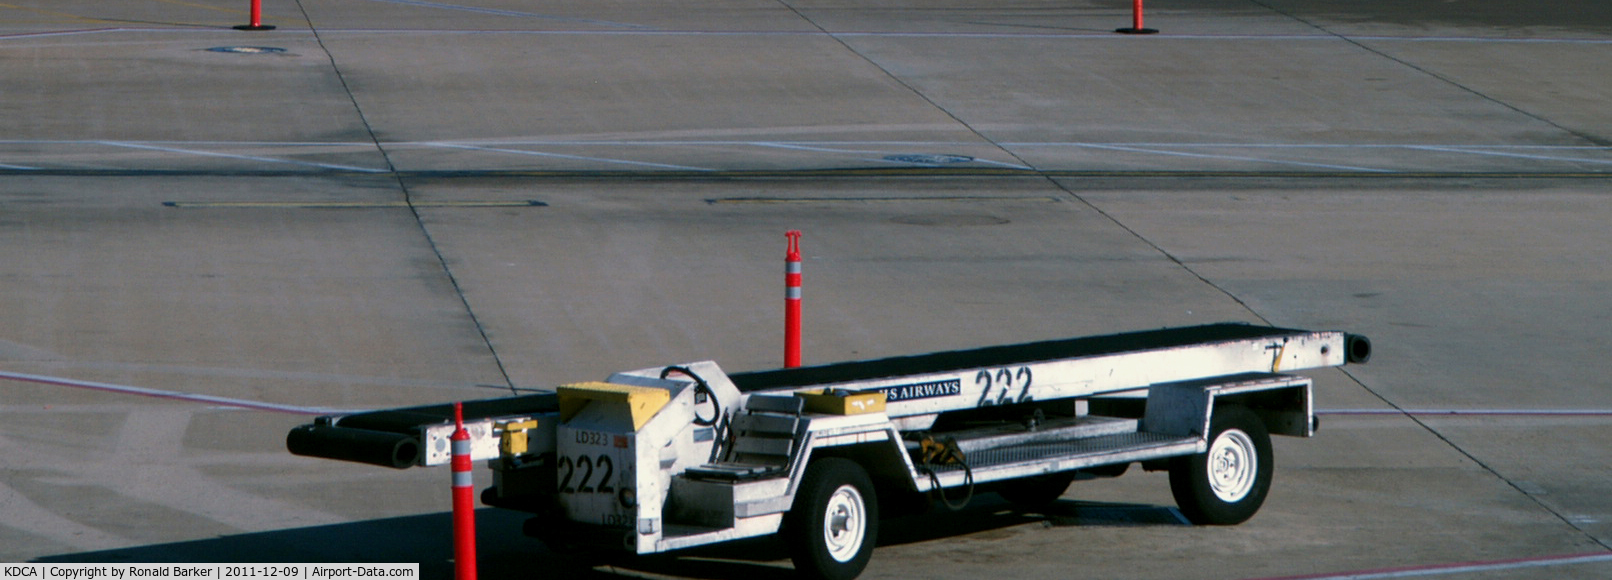 Ronald Reagan Washington National Airport (DCA) - Baggage conveyor # 222